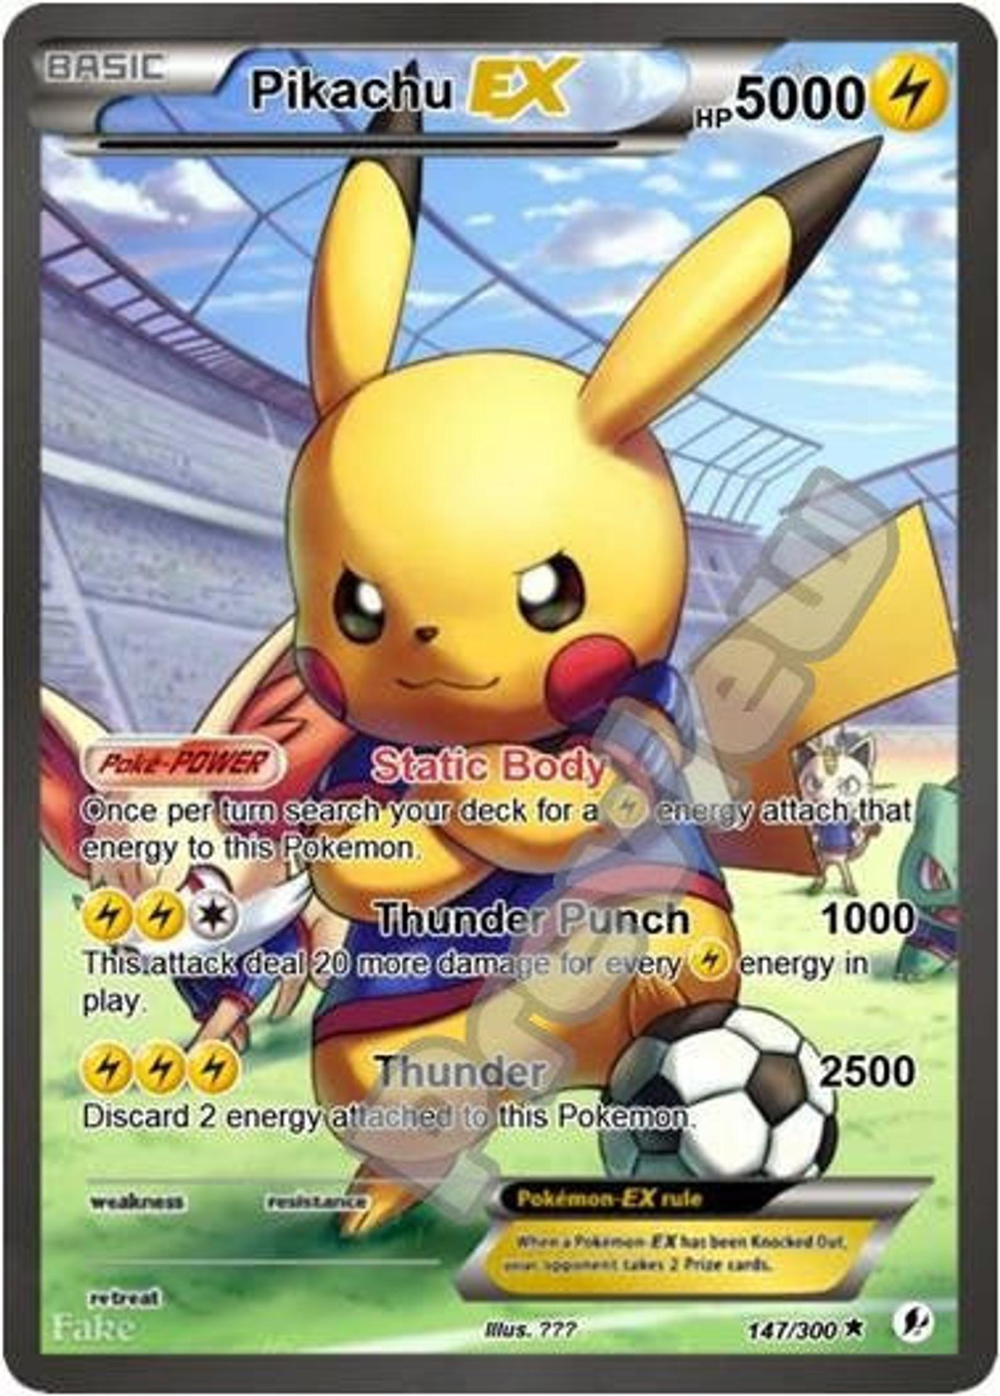 Pikachu gx gmax vmax gigantamax ex pokemon card in 2021.